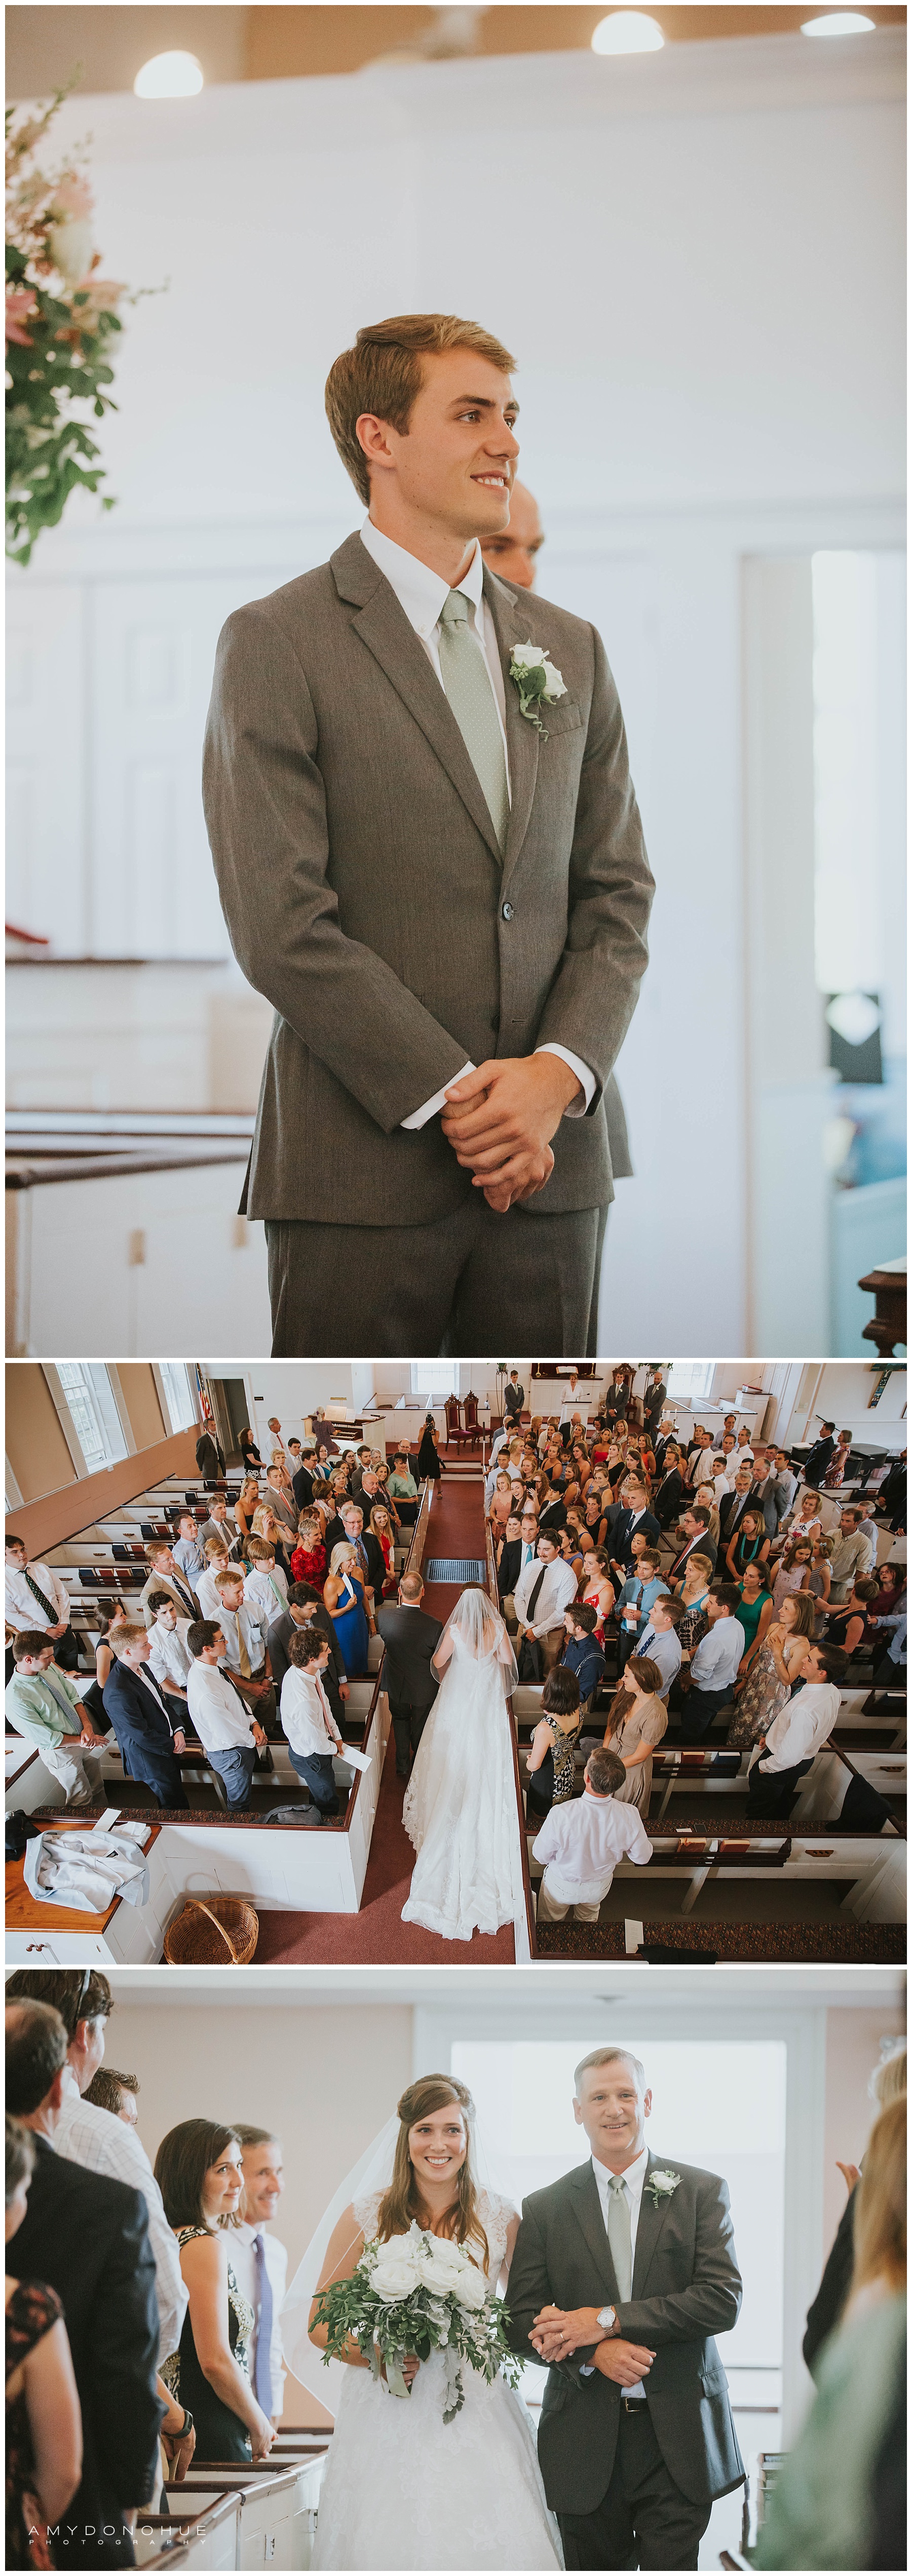 Wedding Ceremony | New Hampshire Wedding Photographer | © Amy Donohue Photography